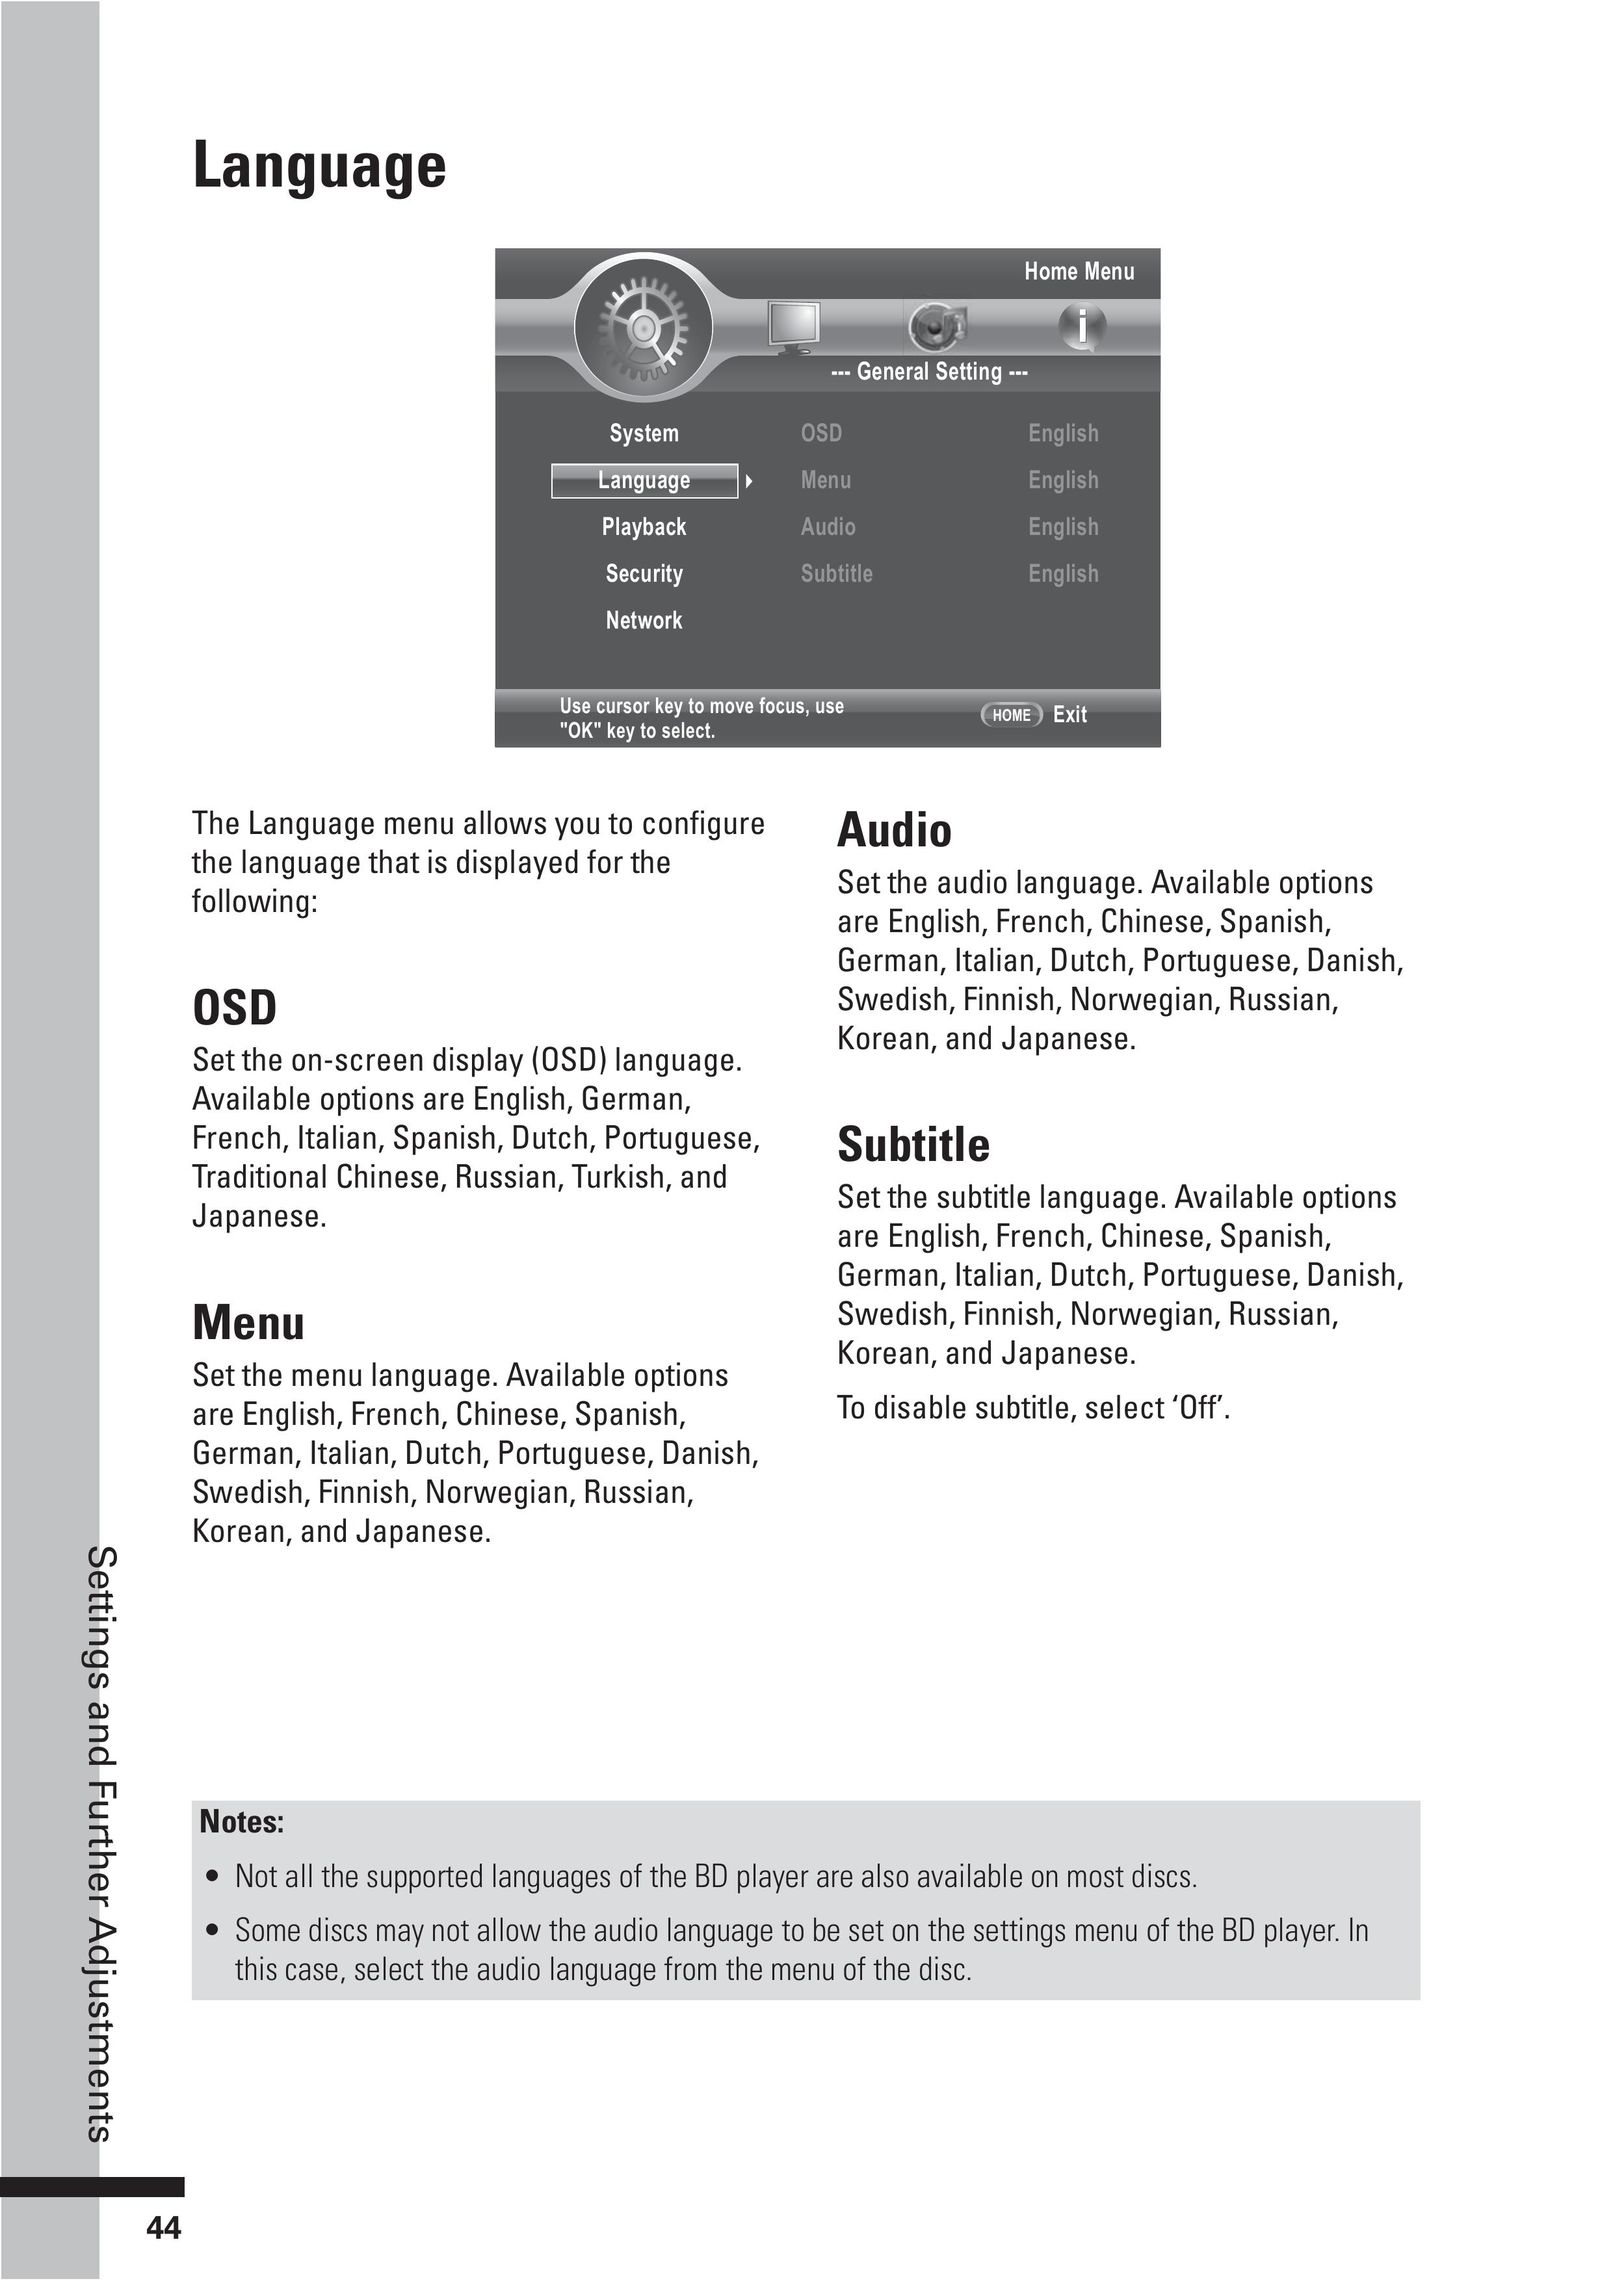 HP (Hewlett-Packard) BD-2000 Blu-ray Player User Manual (Page 44)